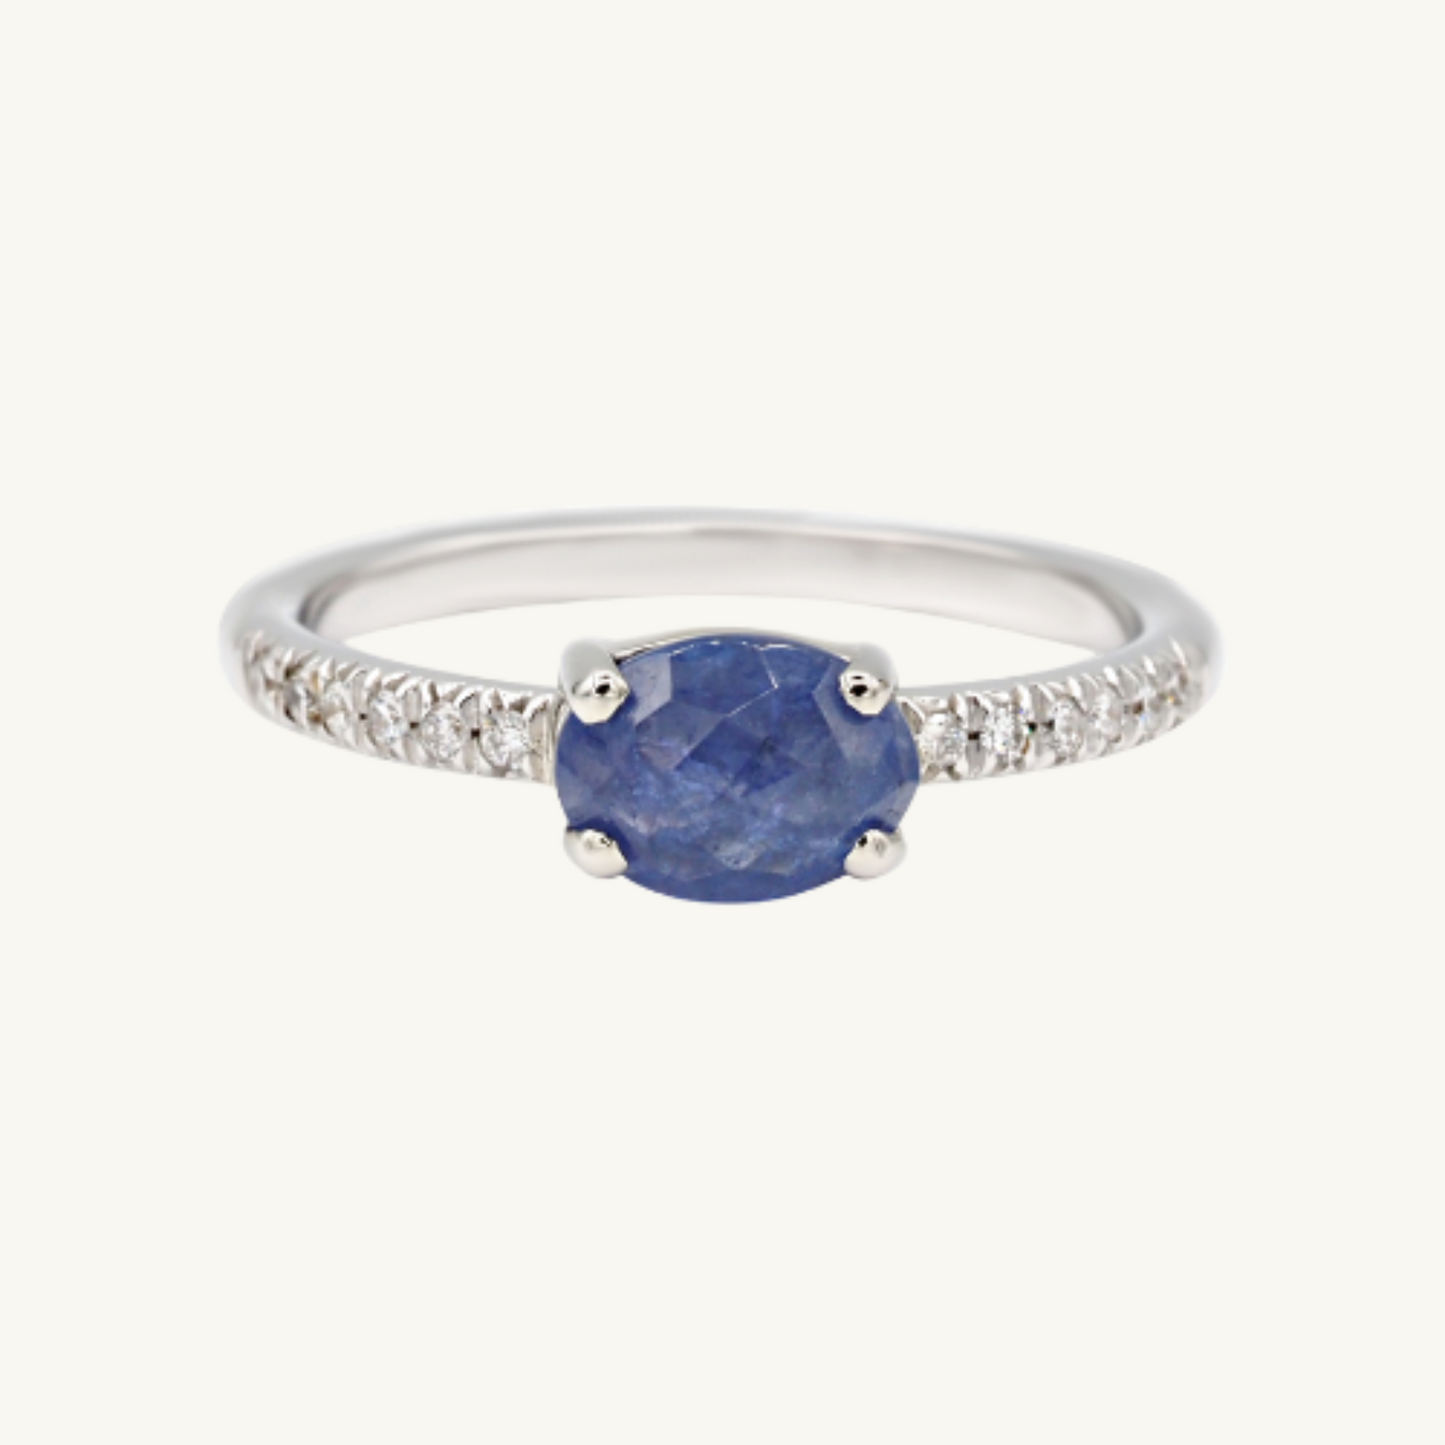 Blue gem ring